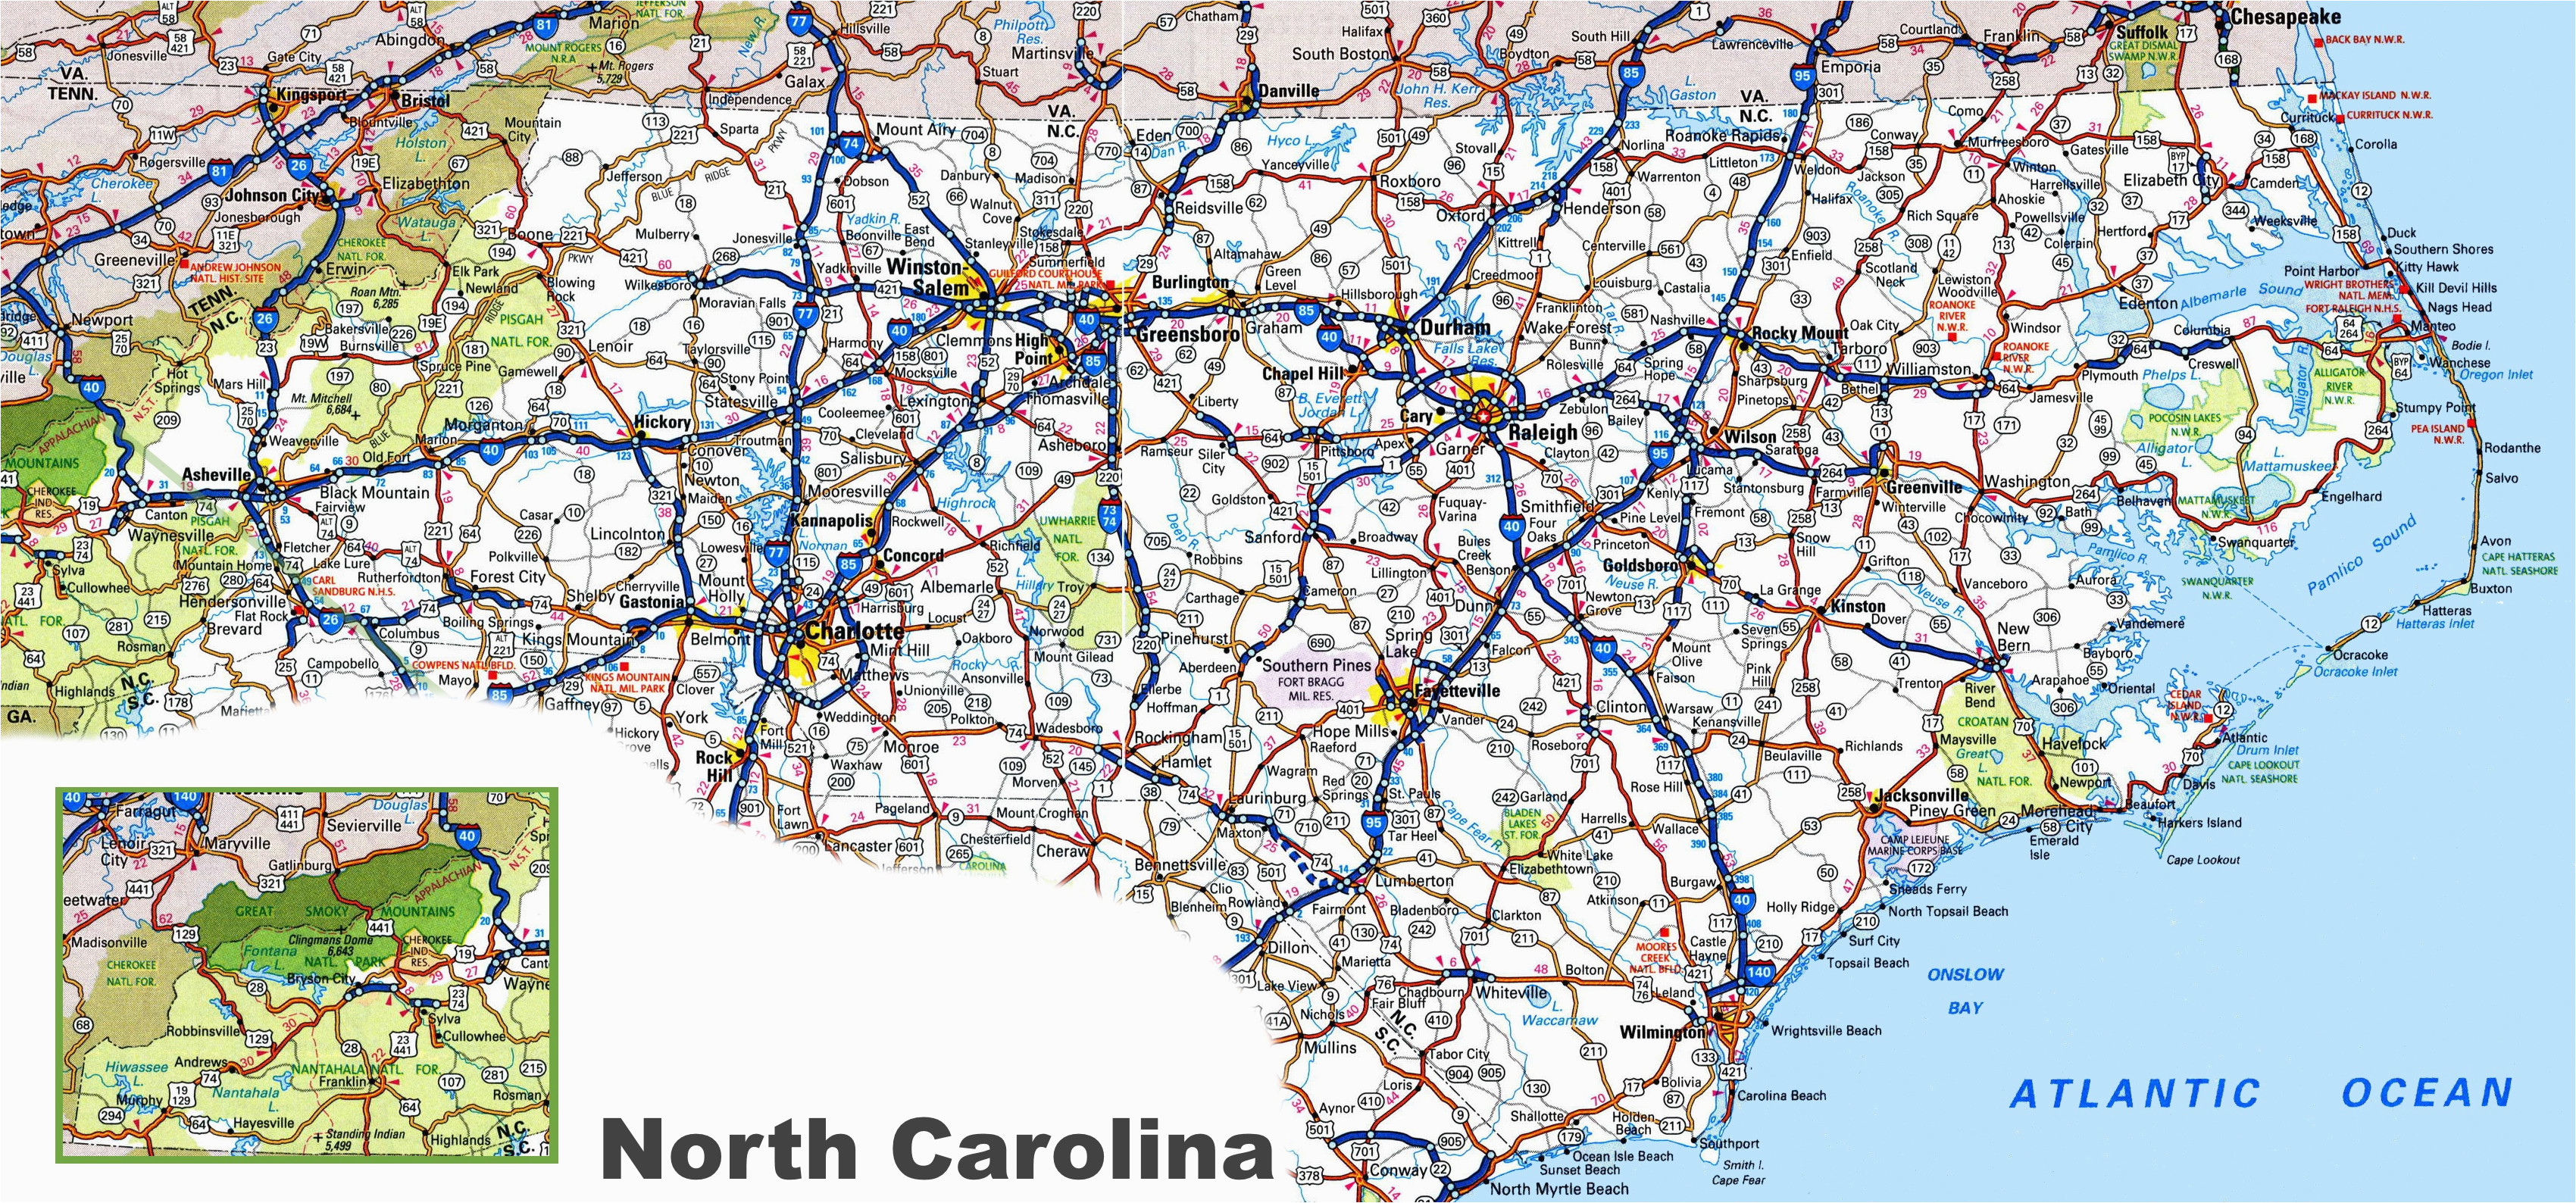 North Carolina County Map with Roads north Carolina Road Map